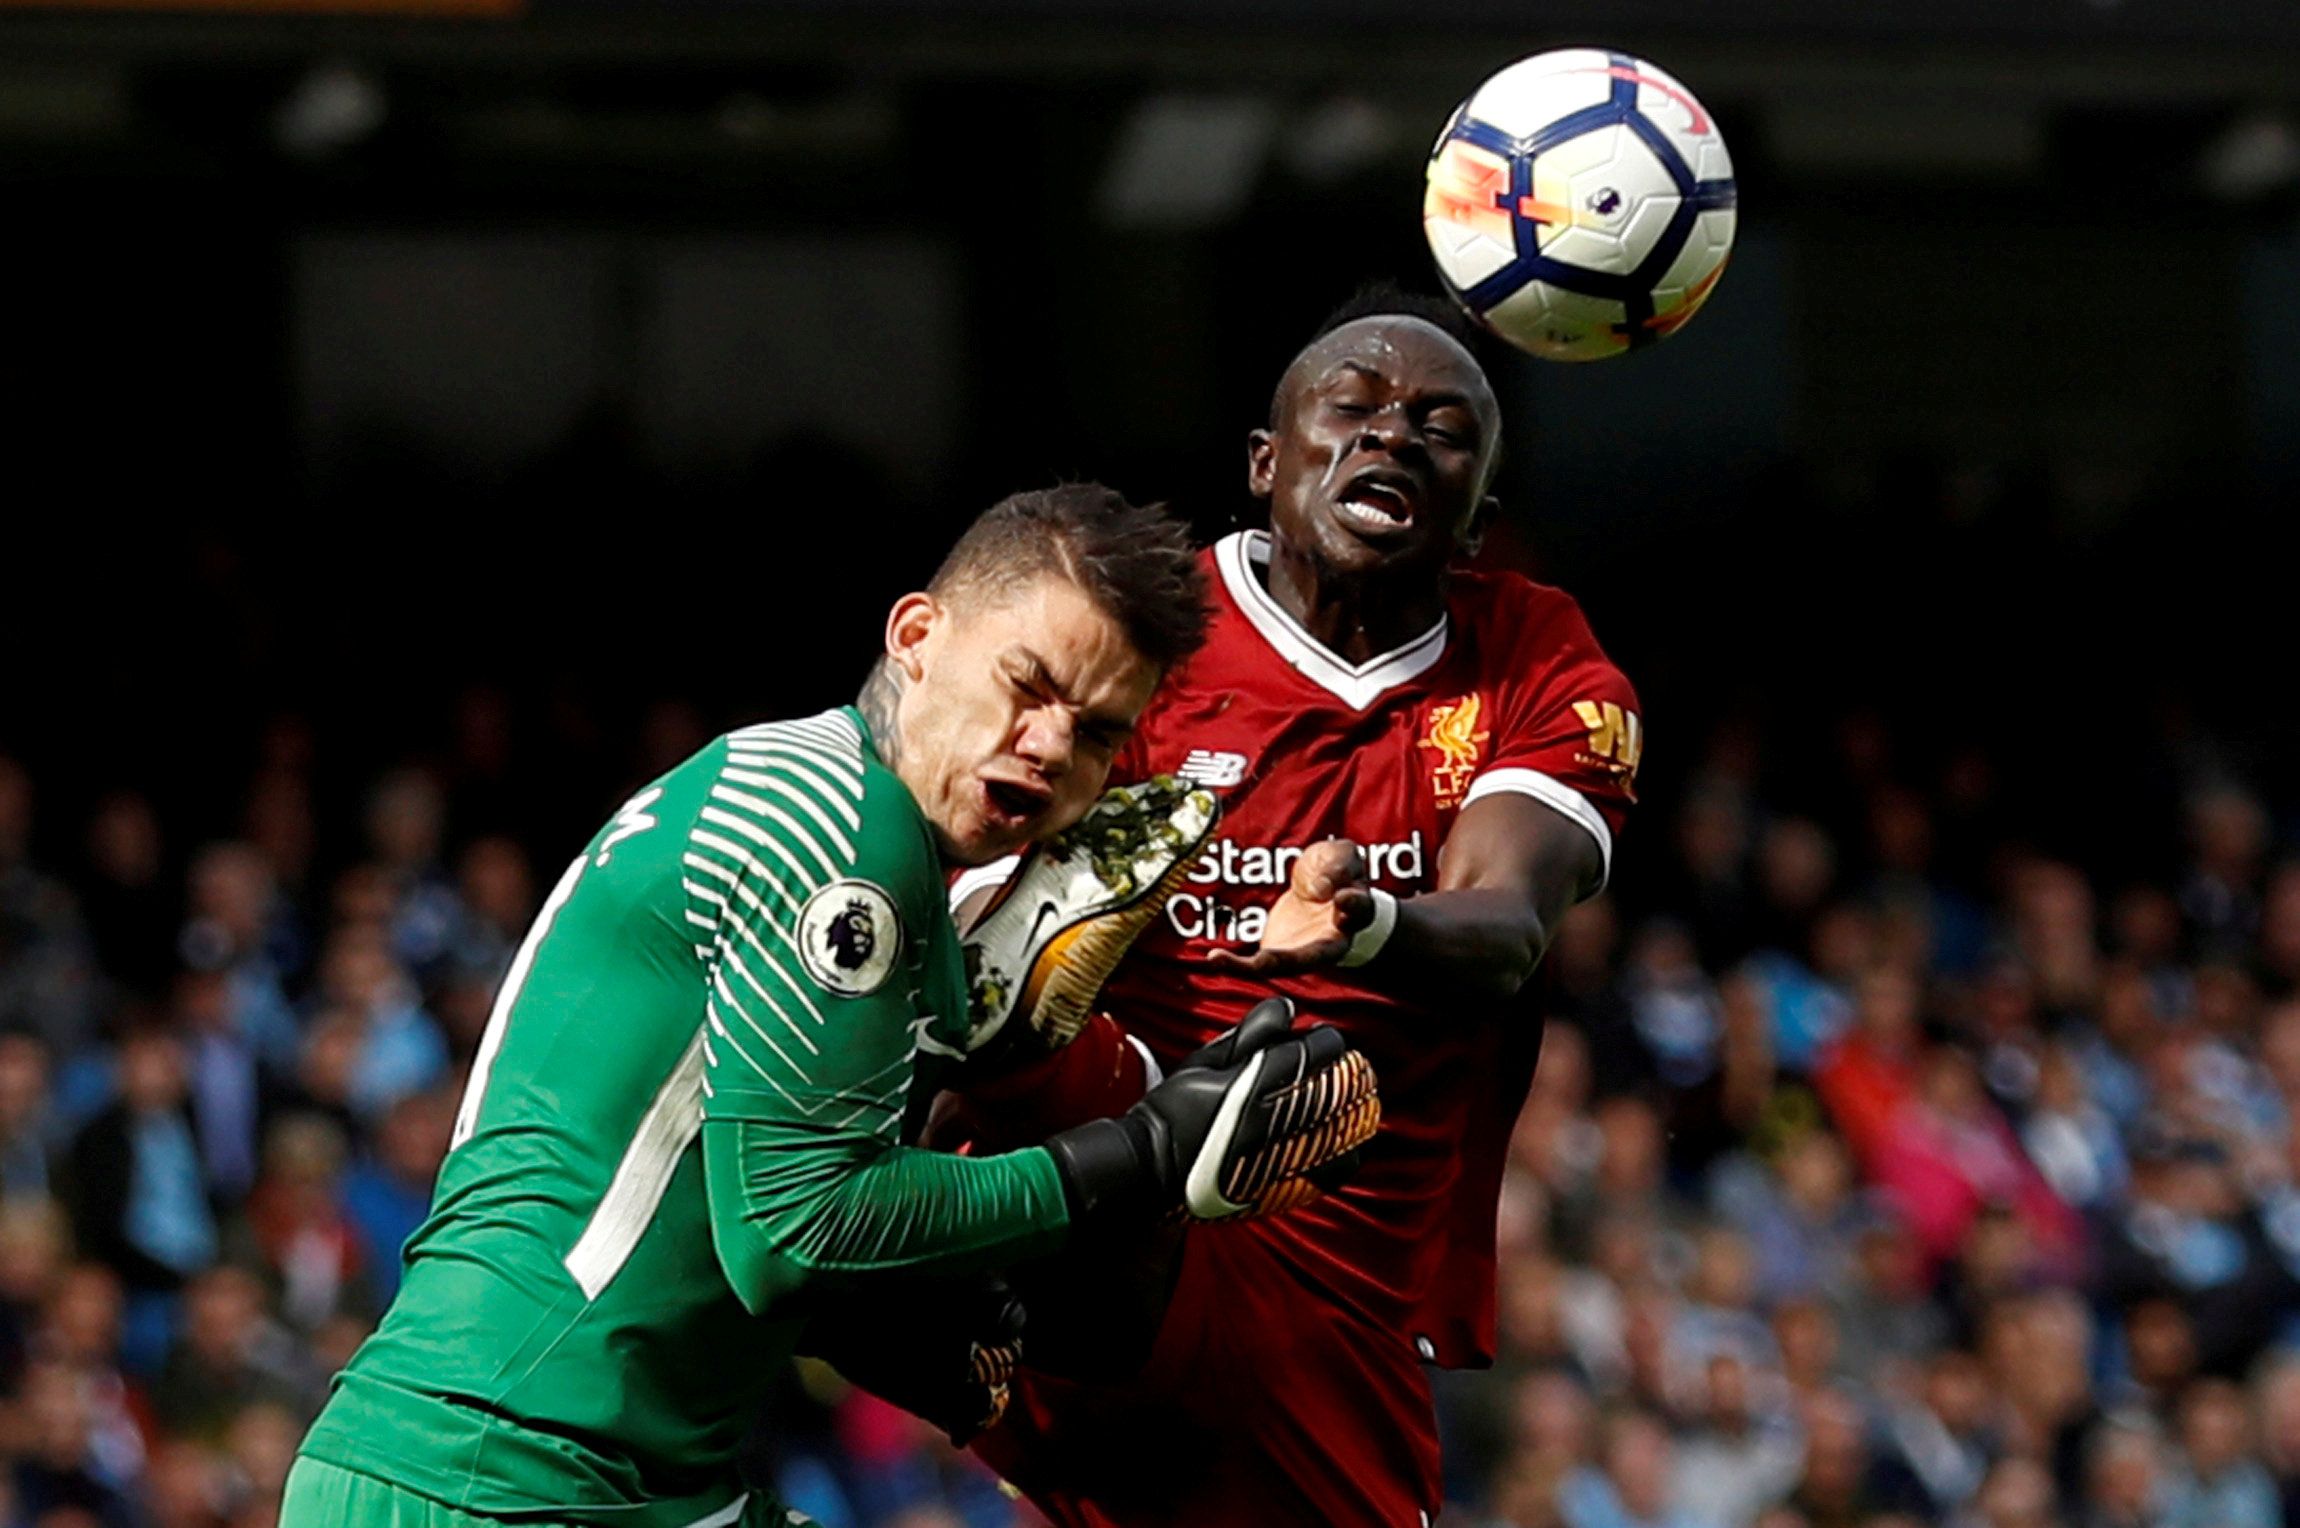 Liverpool's Sadio Mane clashes with Man City's Ederson